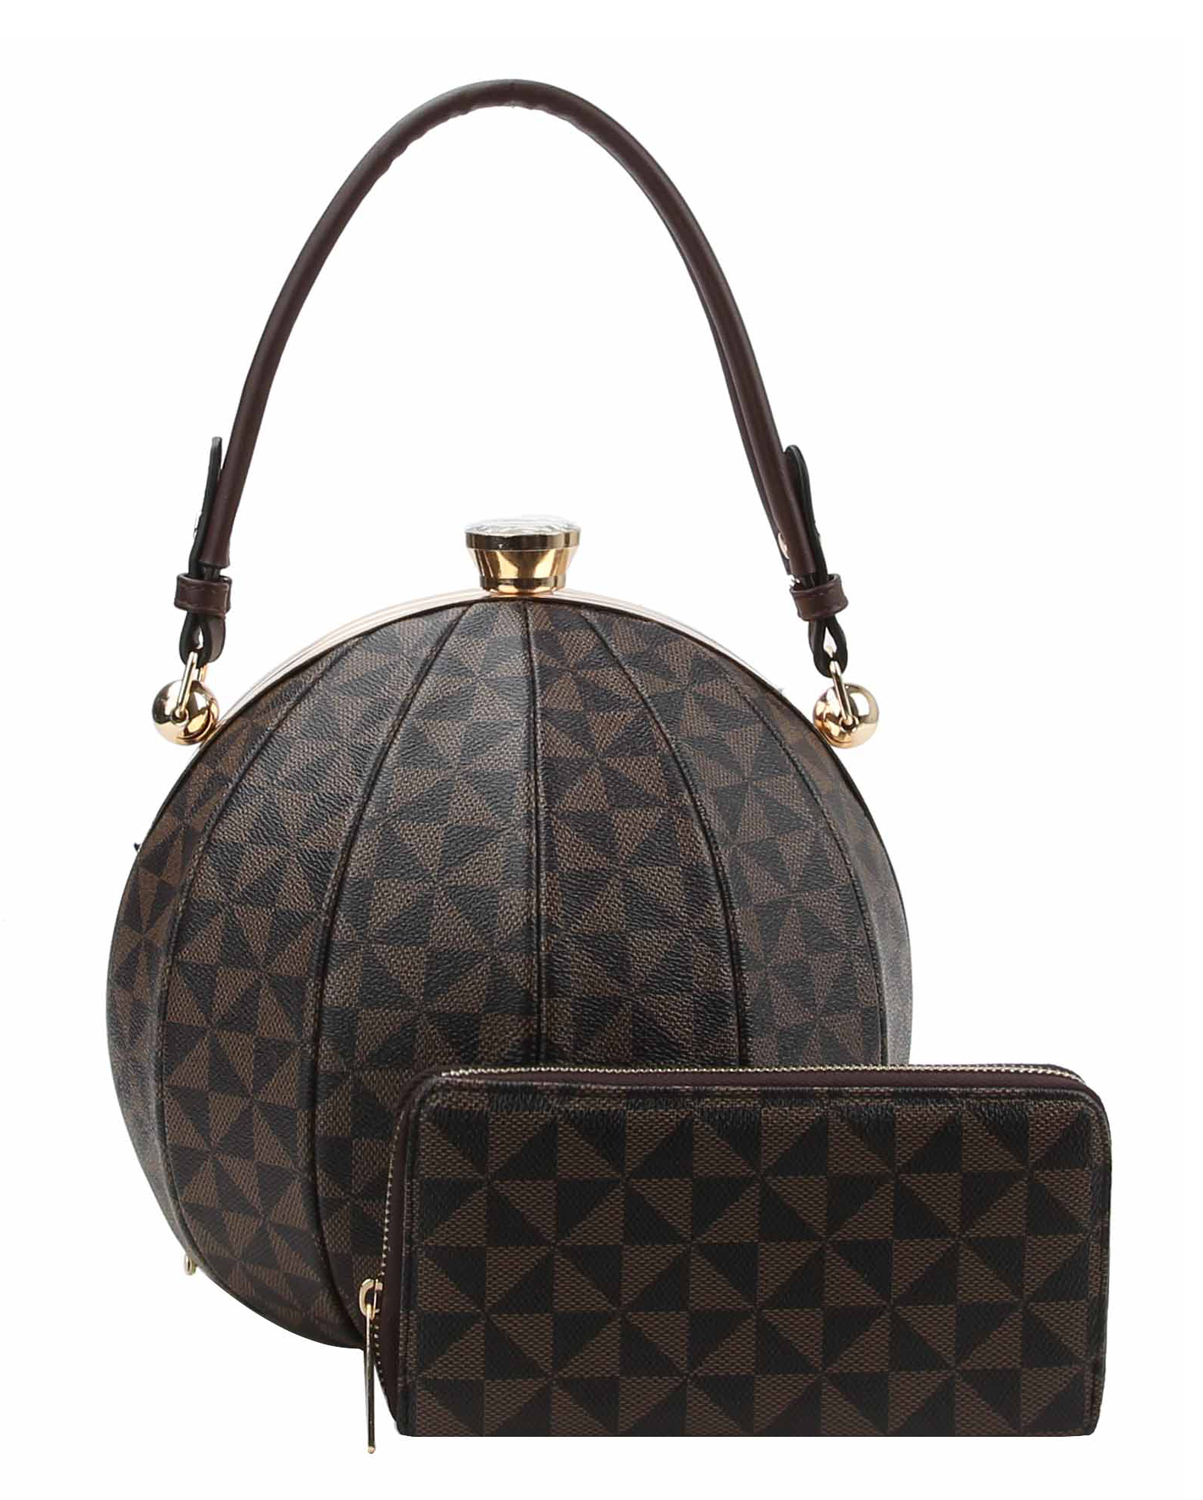 Round Sphere Handbag Triangle Patter Beach Ball Bag Purse + Wallet Set Coffee - Handbags & Purses